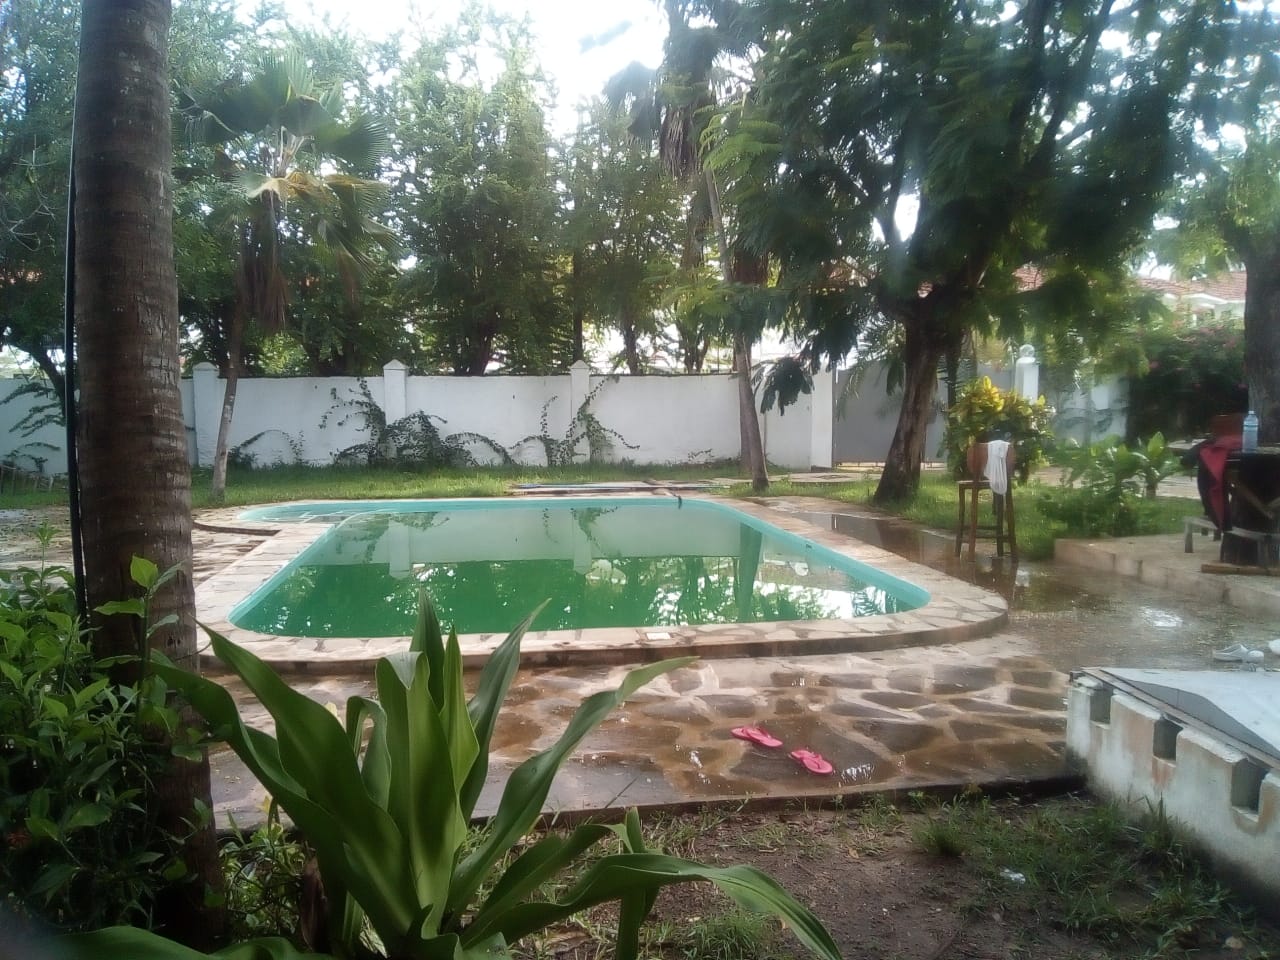 A 5 bedroom villa on sale in Ukunda Kwale